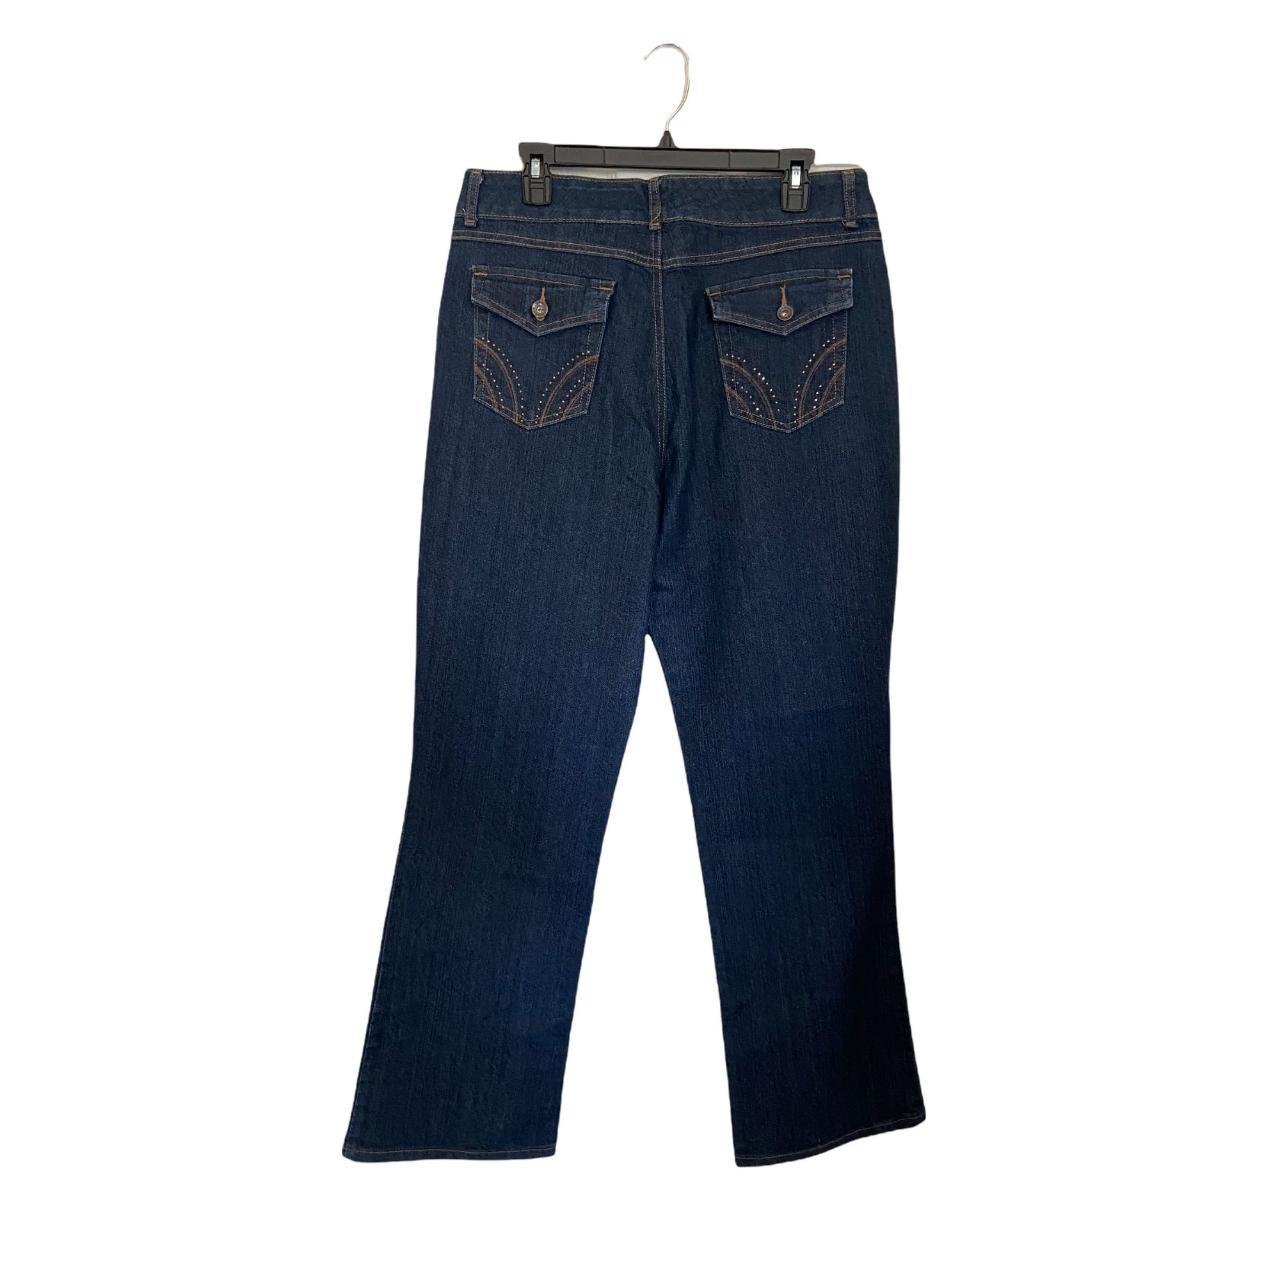 Bandolino blue denim Jeans with Jeweled Back Pockets... - Depop